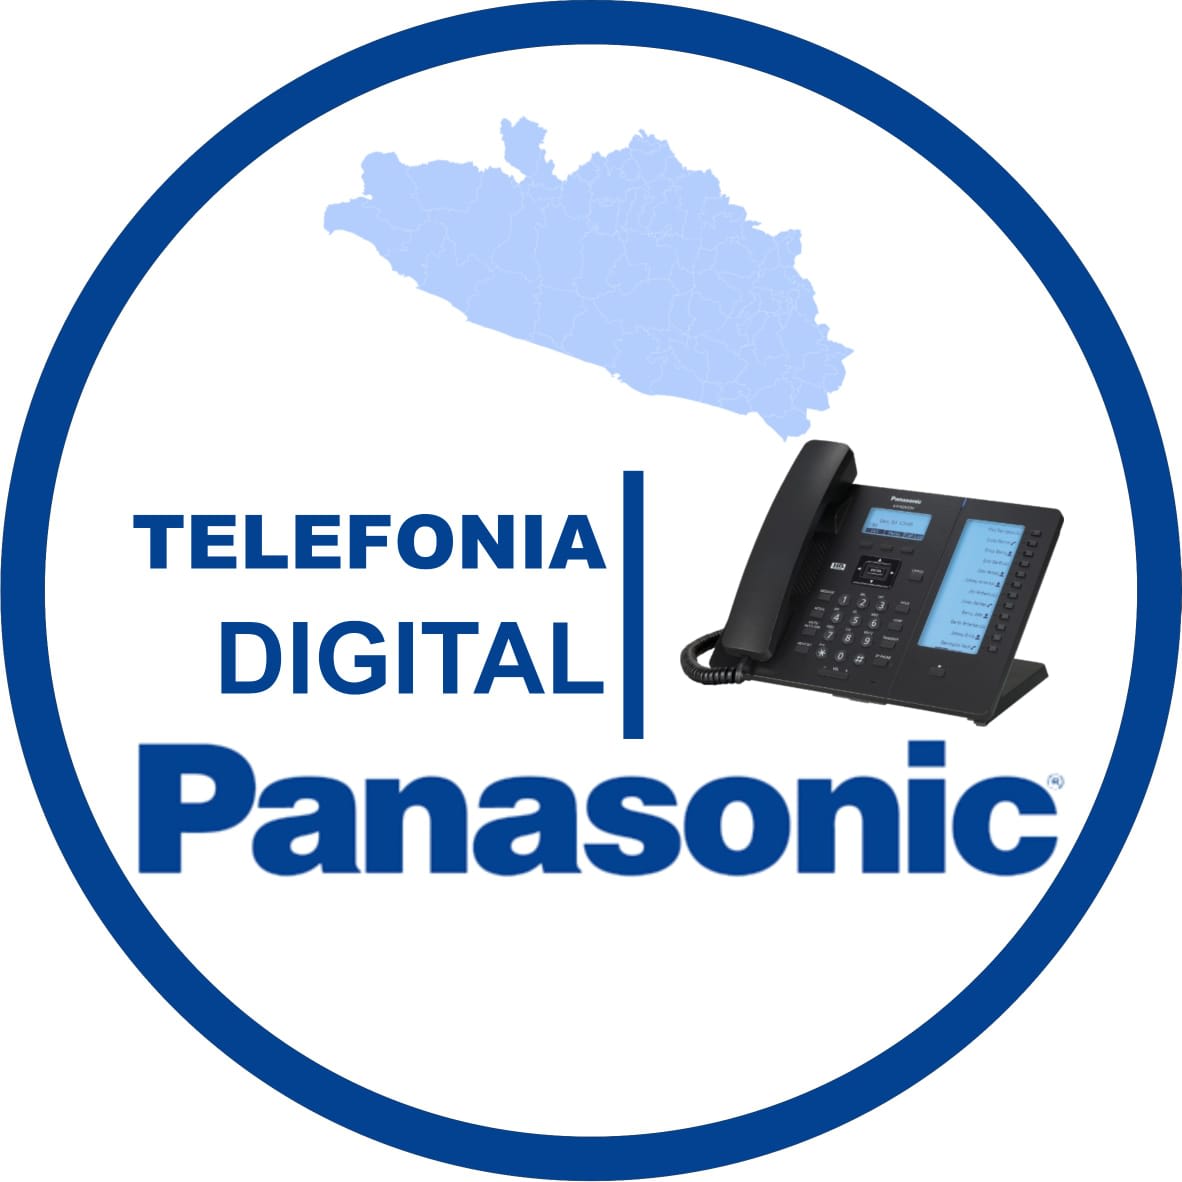 Telefonía Digital Panasonic